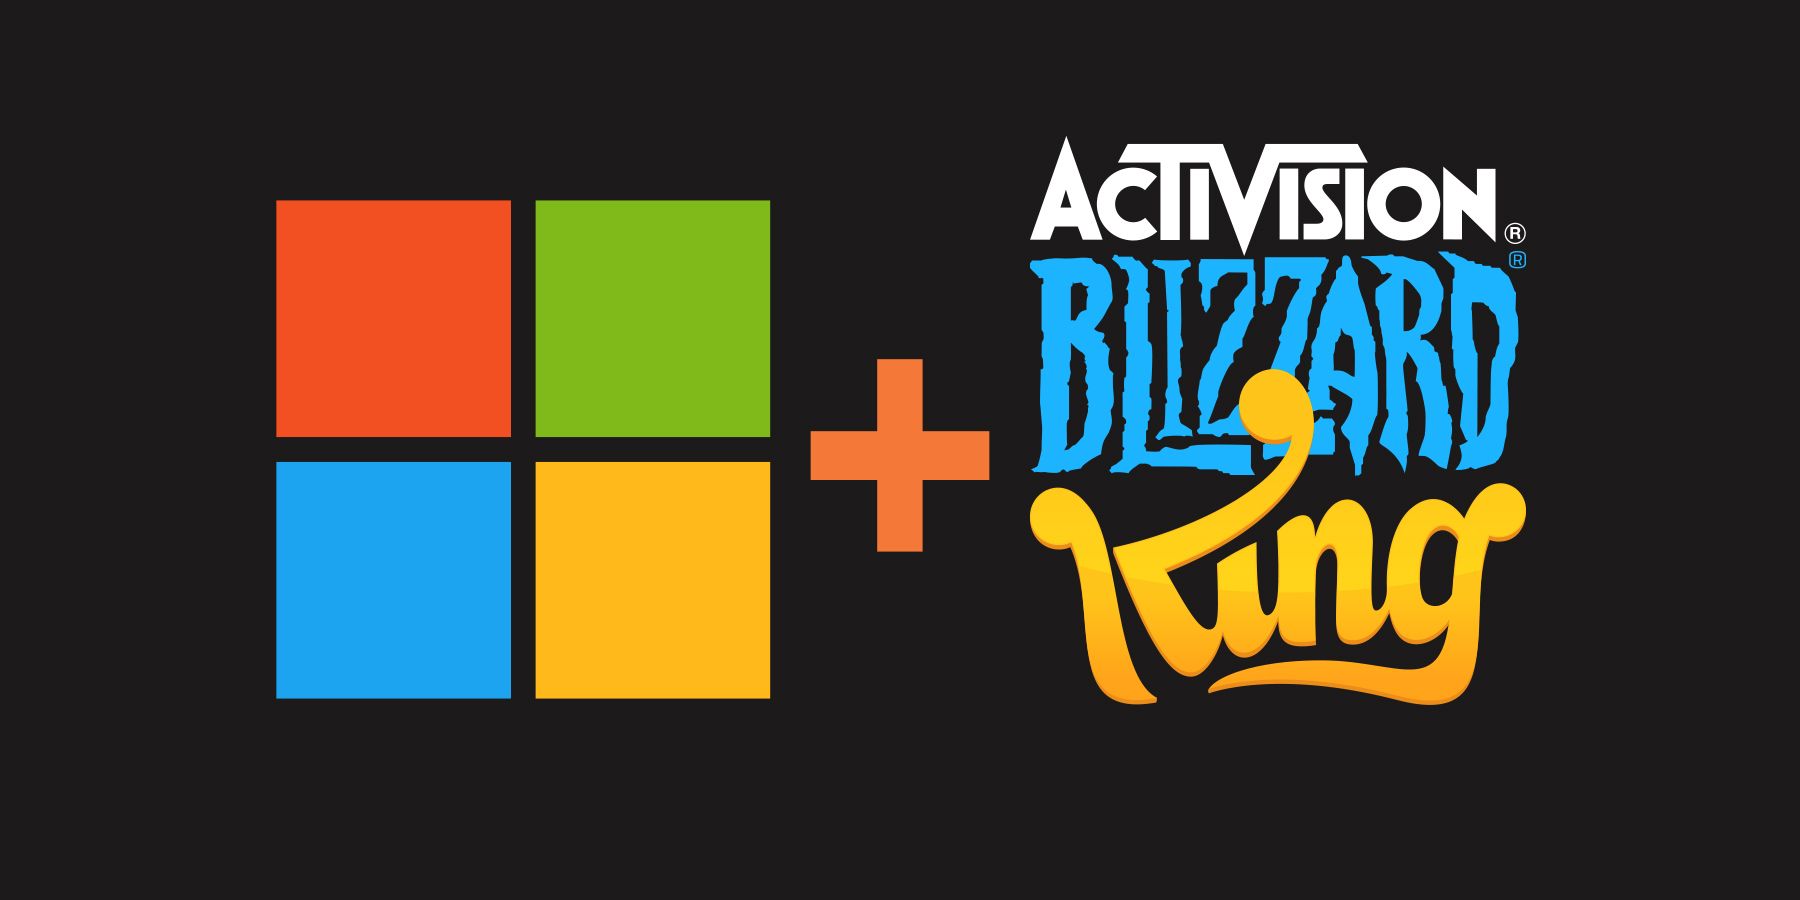 Microsoft plus Activision Blizzard King logos on Eerie Black background